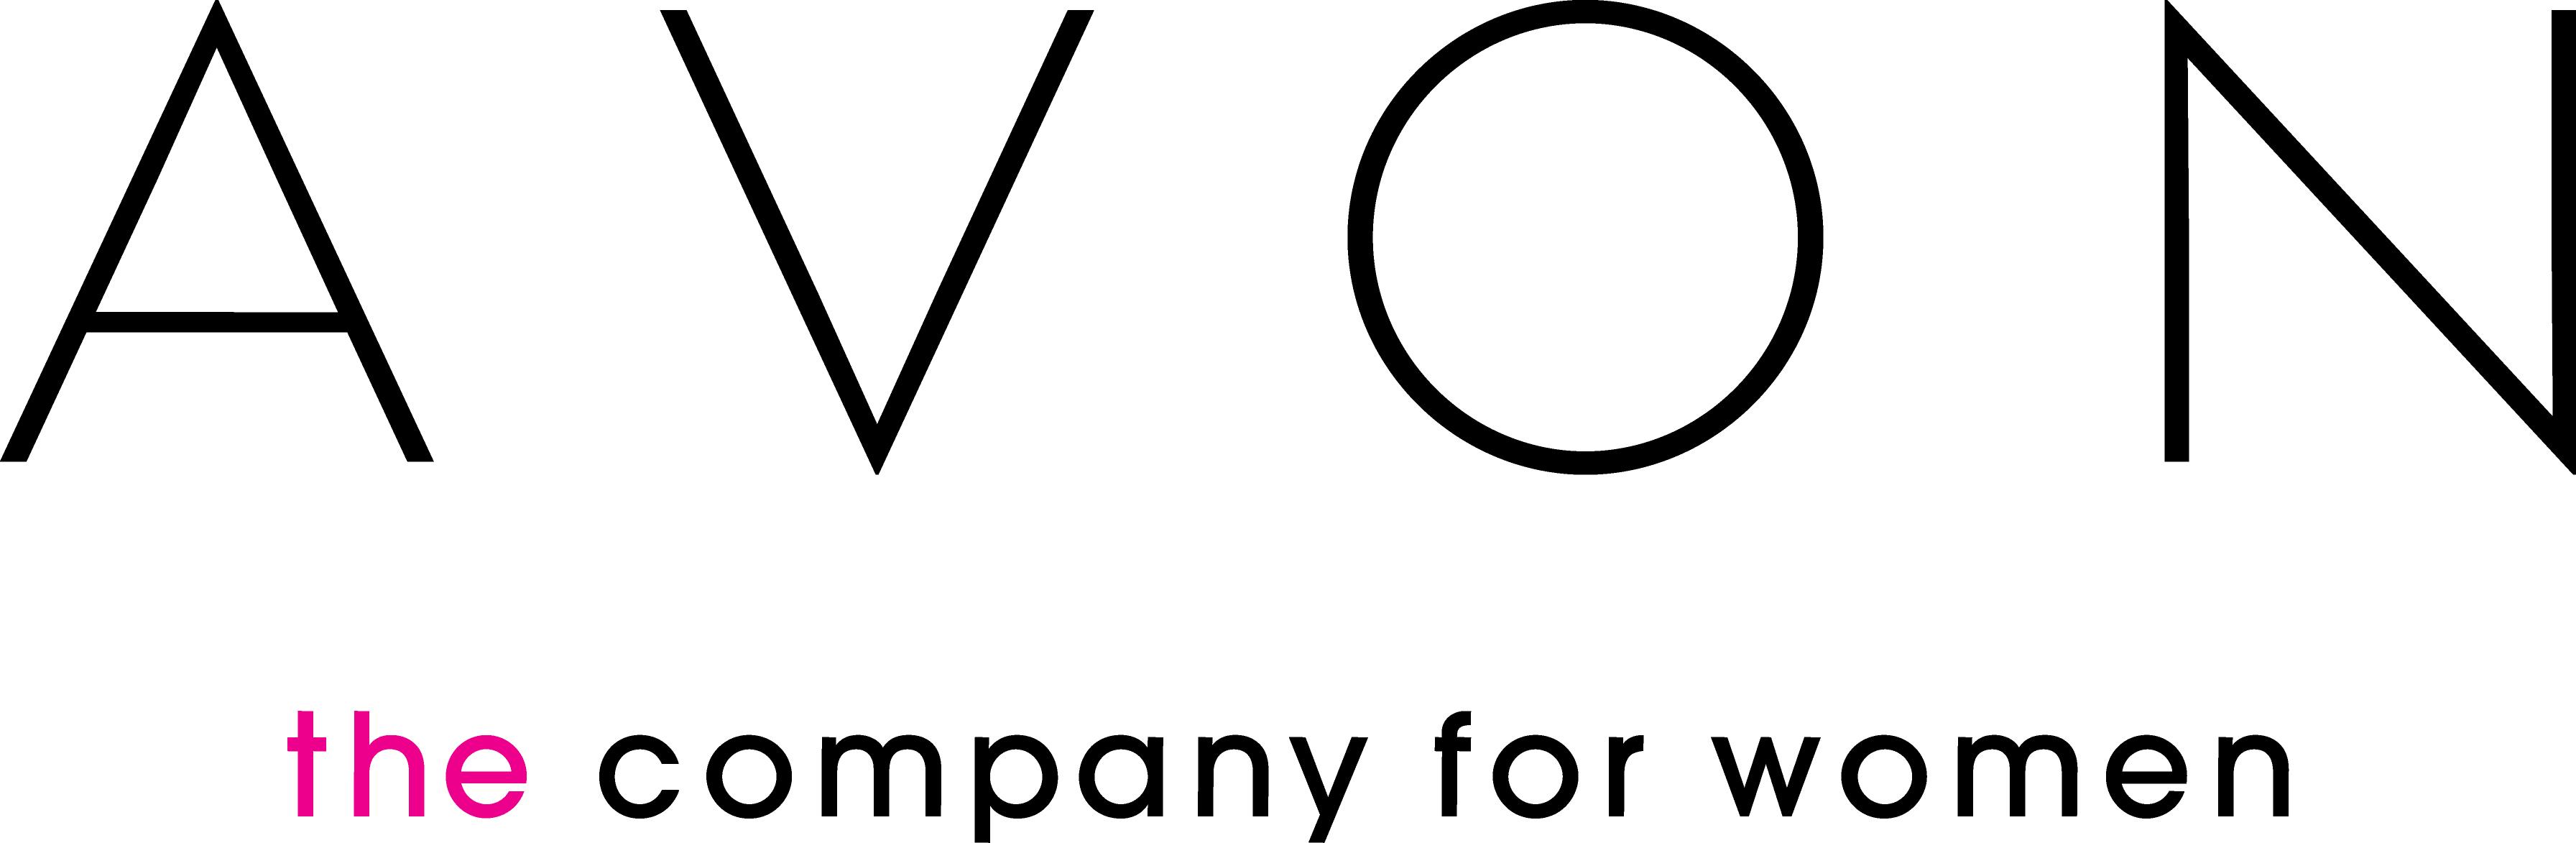 Avon Logo - Avon the company for women logo